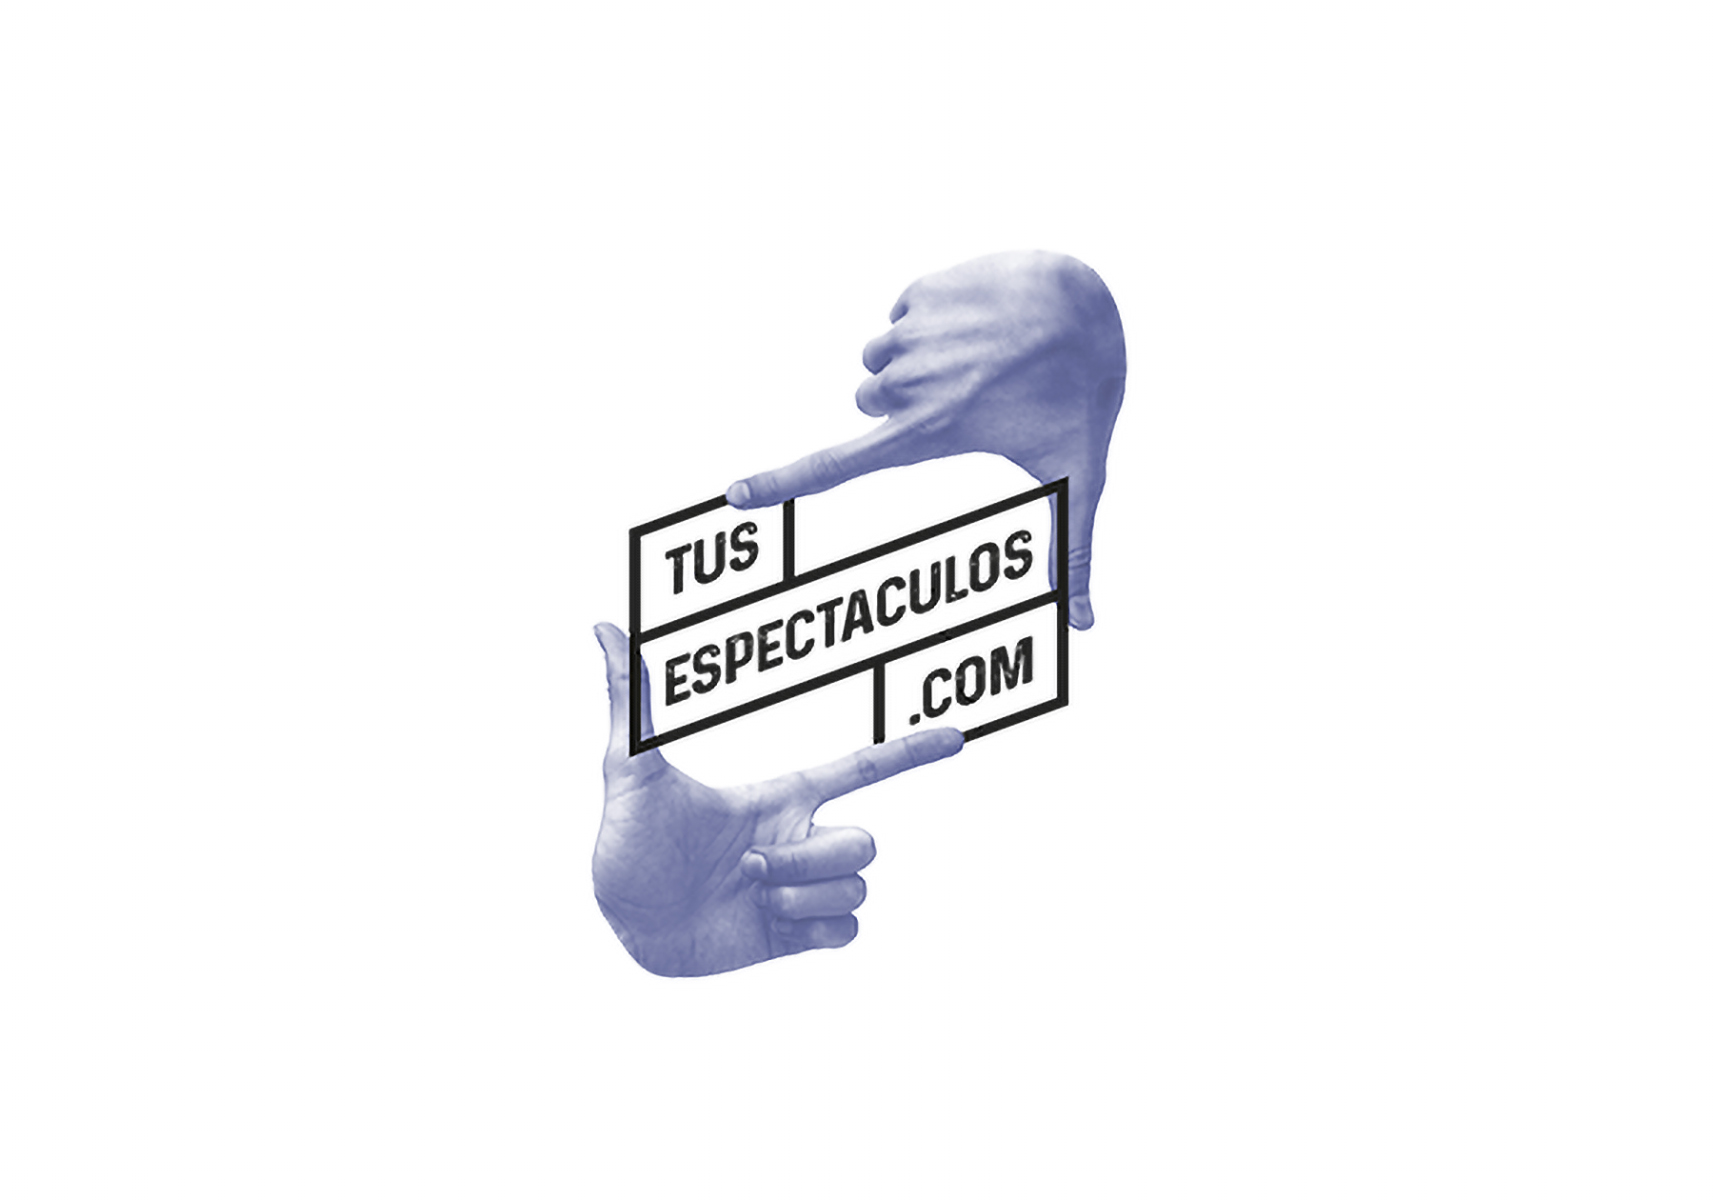 TUS ESPECTACULOS by CREATIAS ESTUDIO - Creative Work